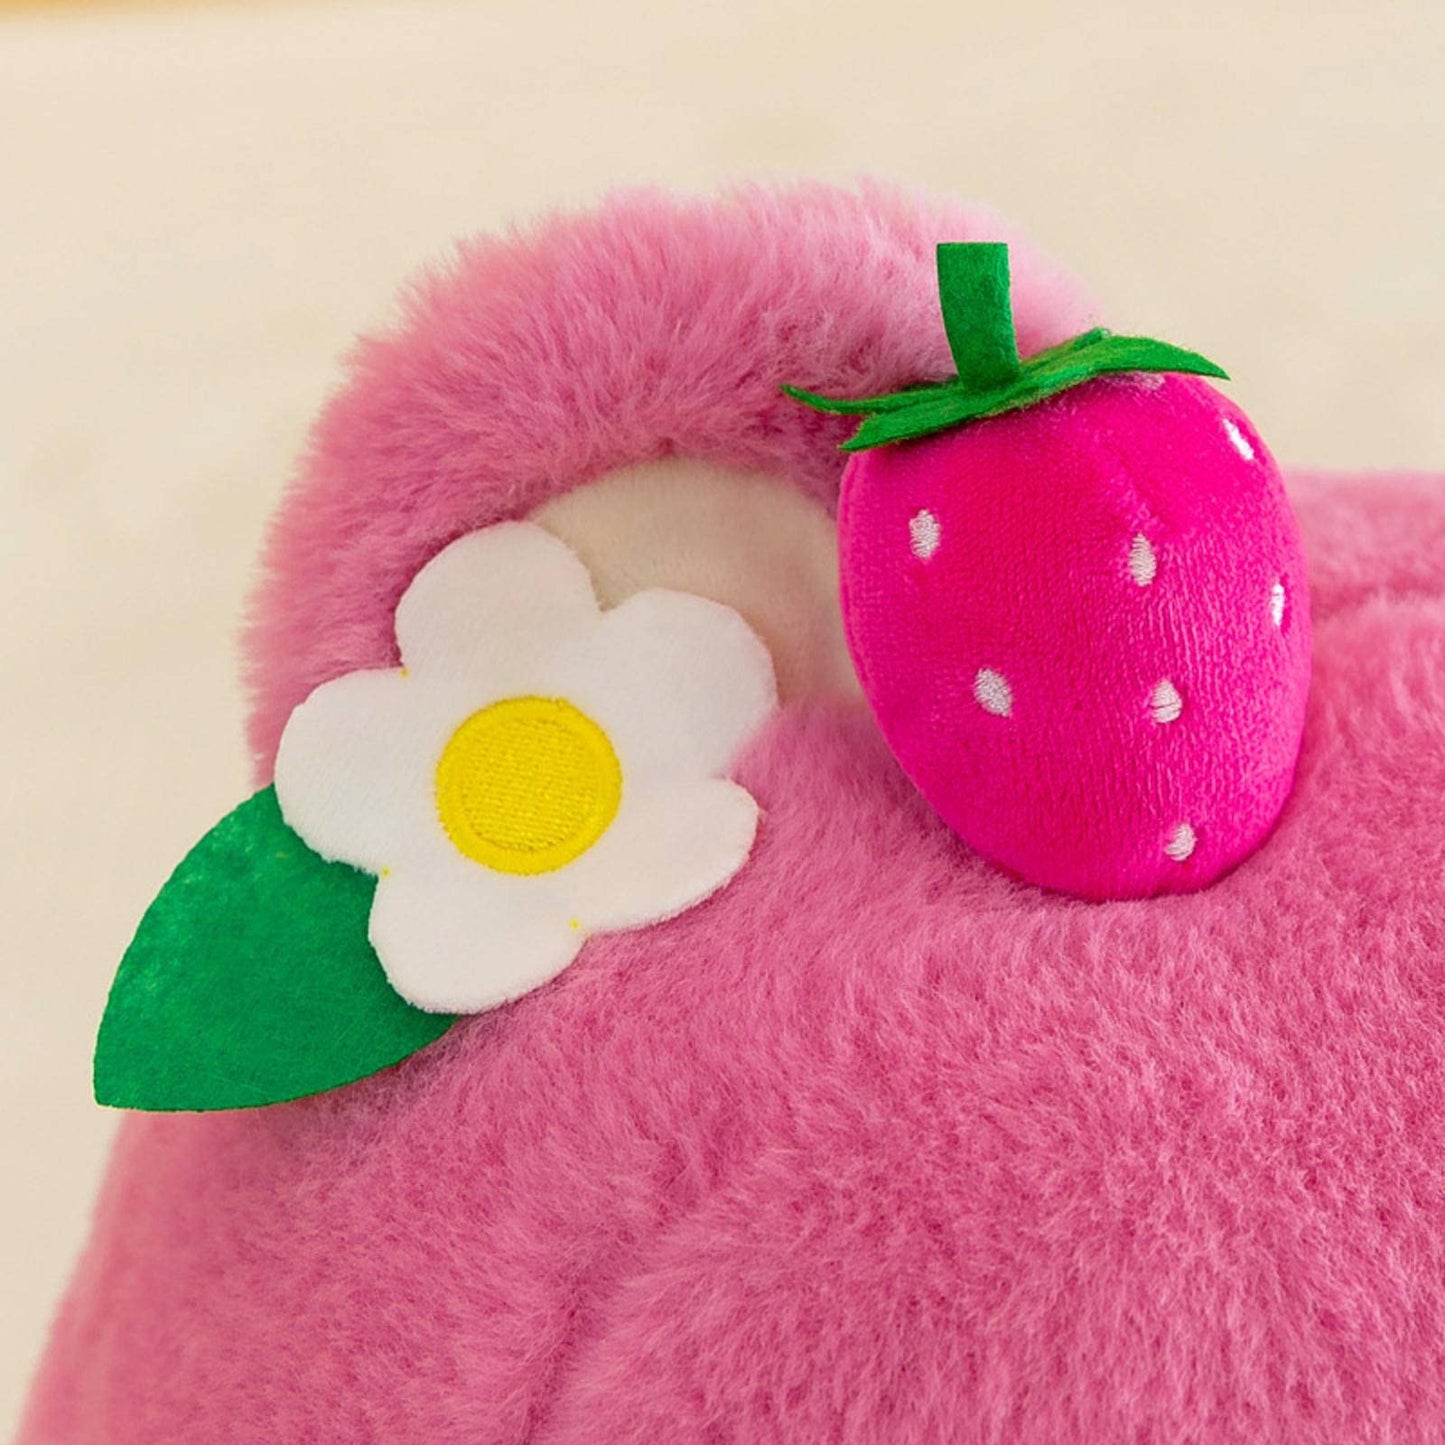 Sleeping dream strawberry bear plush toy lying large size pillow scissors Doll Gift